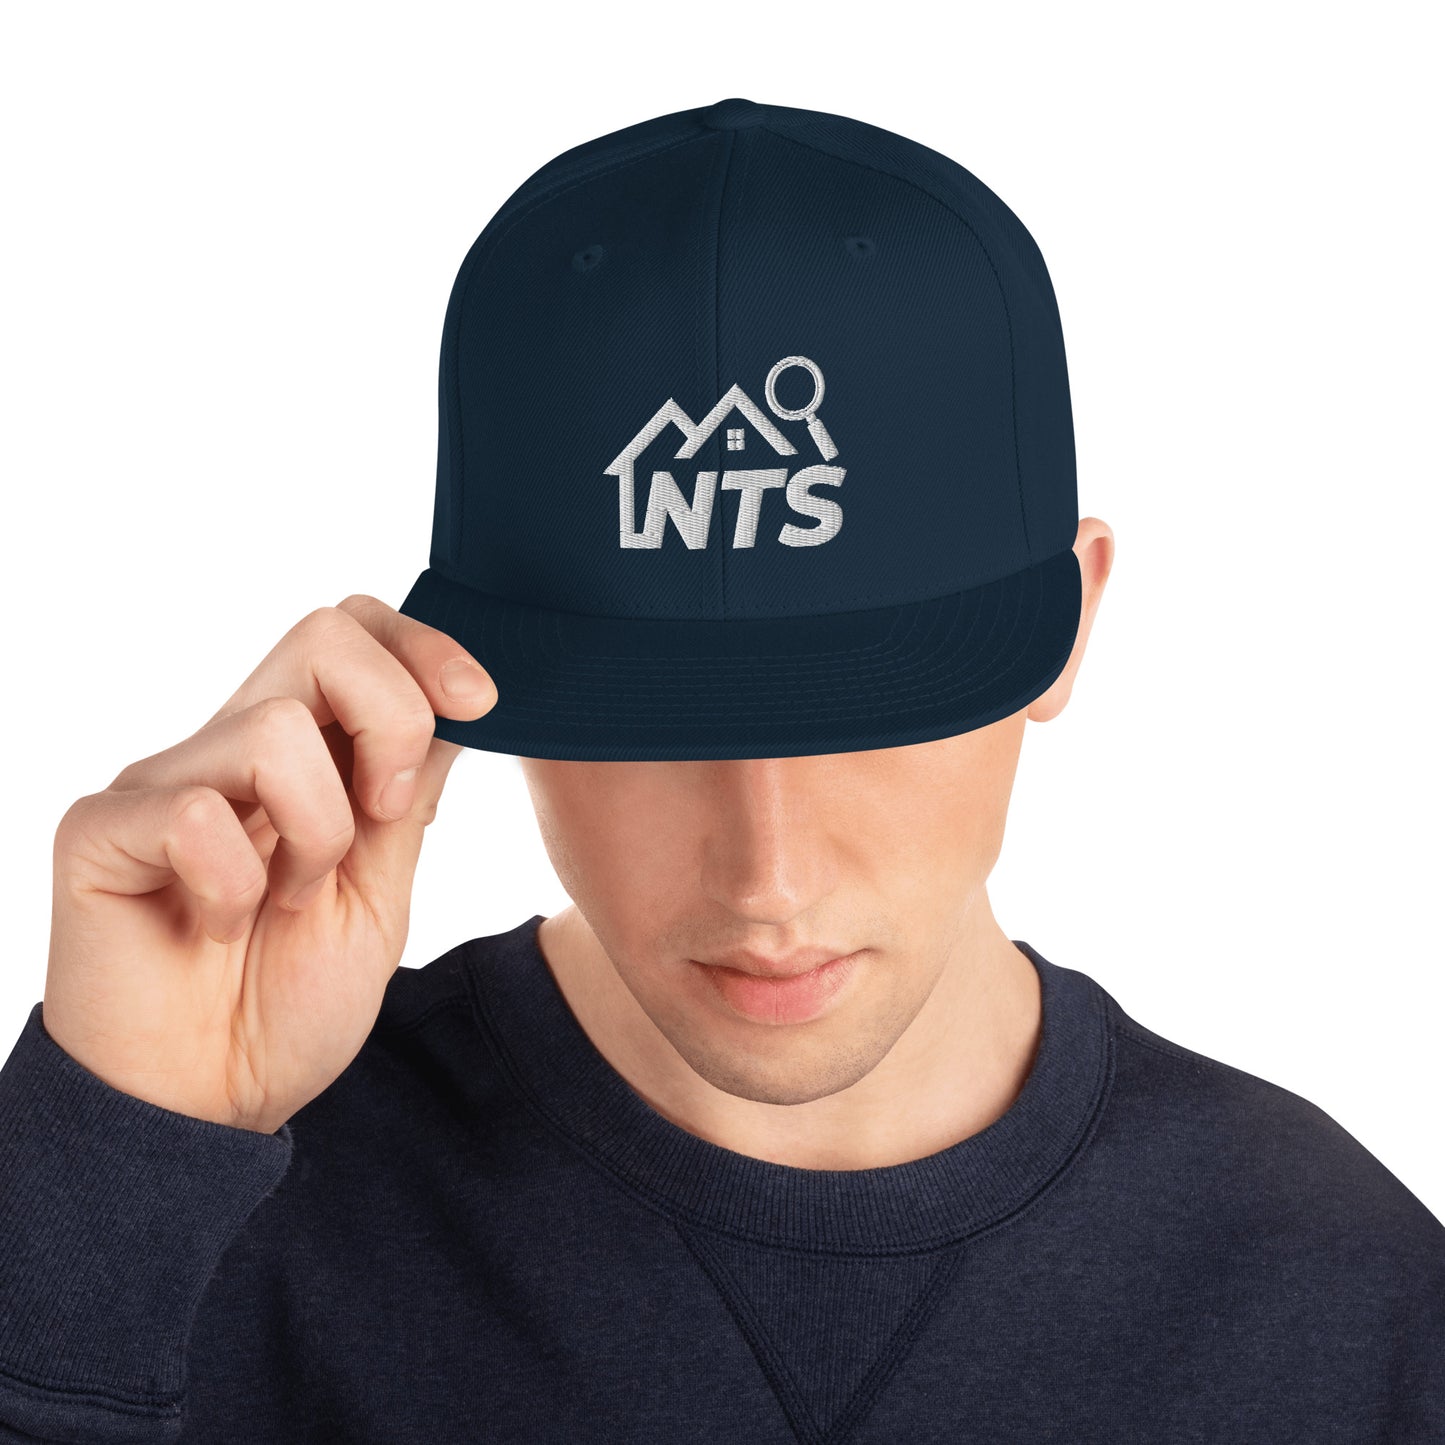 NTS Snapback Hat White